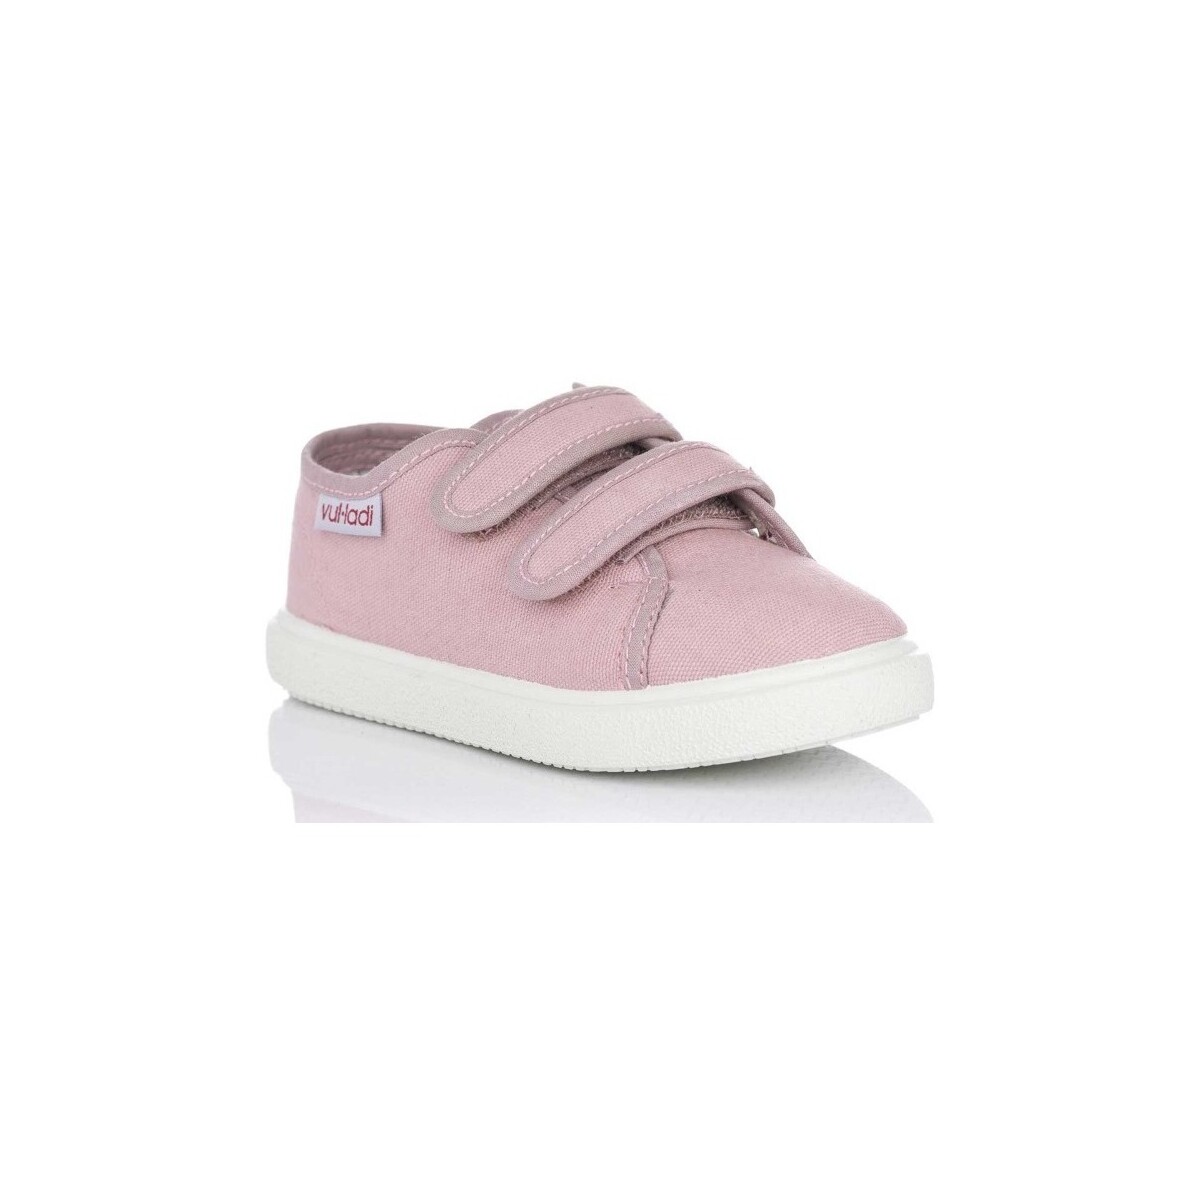 Schuhe Sneaker Low Vulladi 445-558 Violett